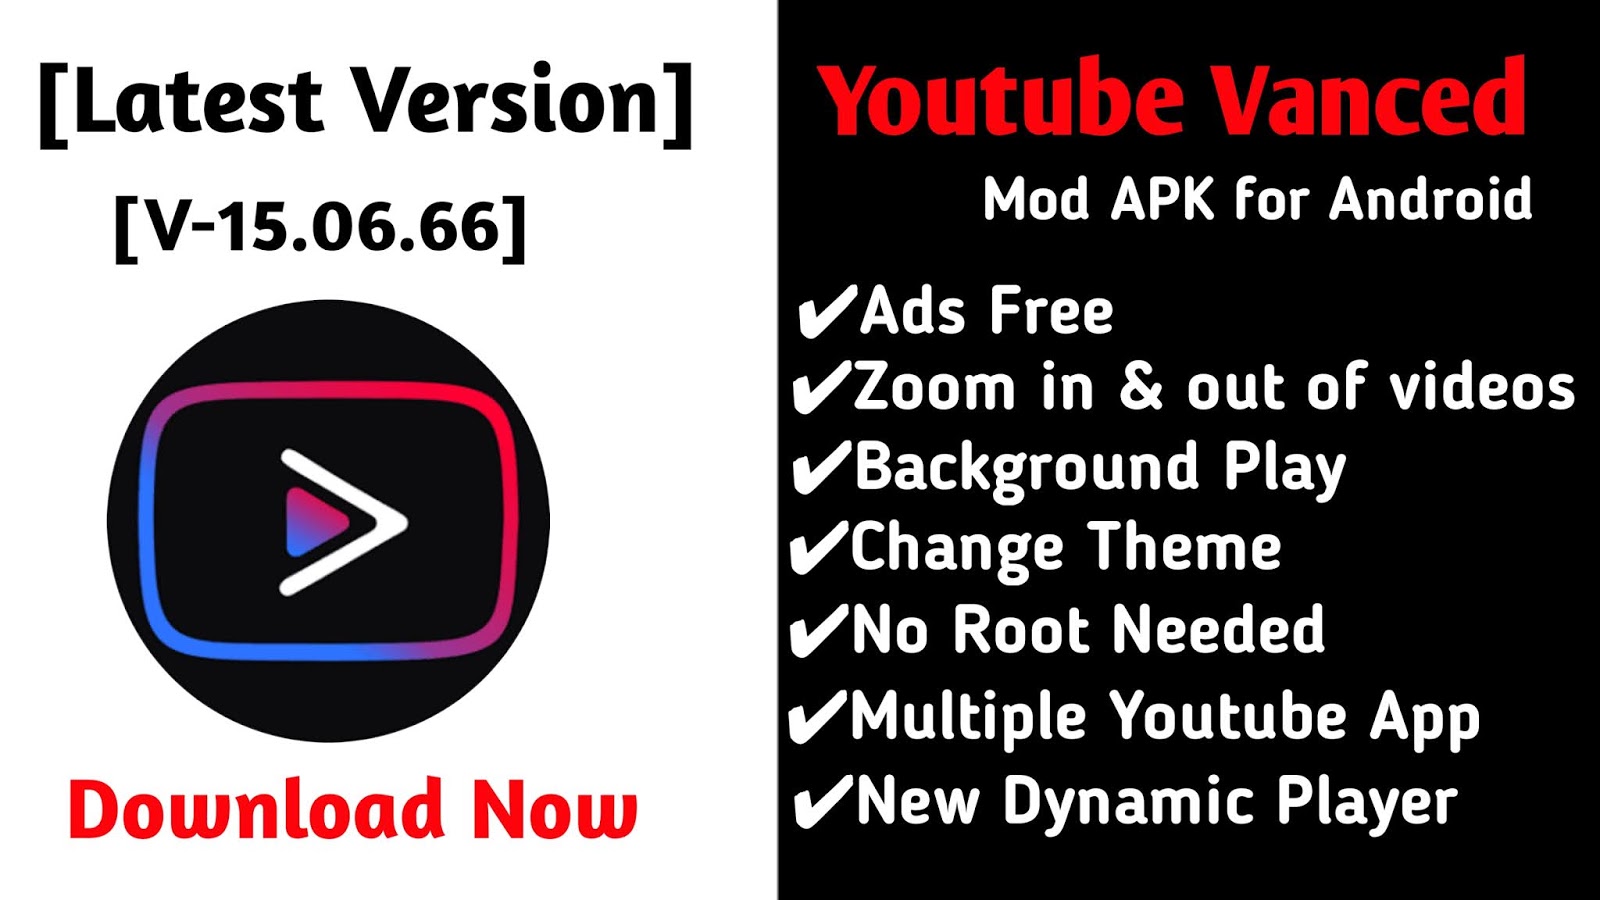 youtube vanced apk latest version